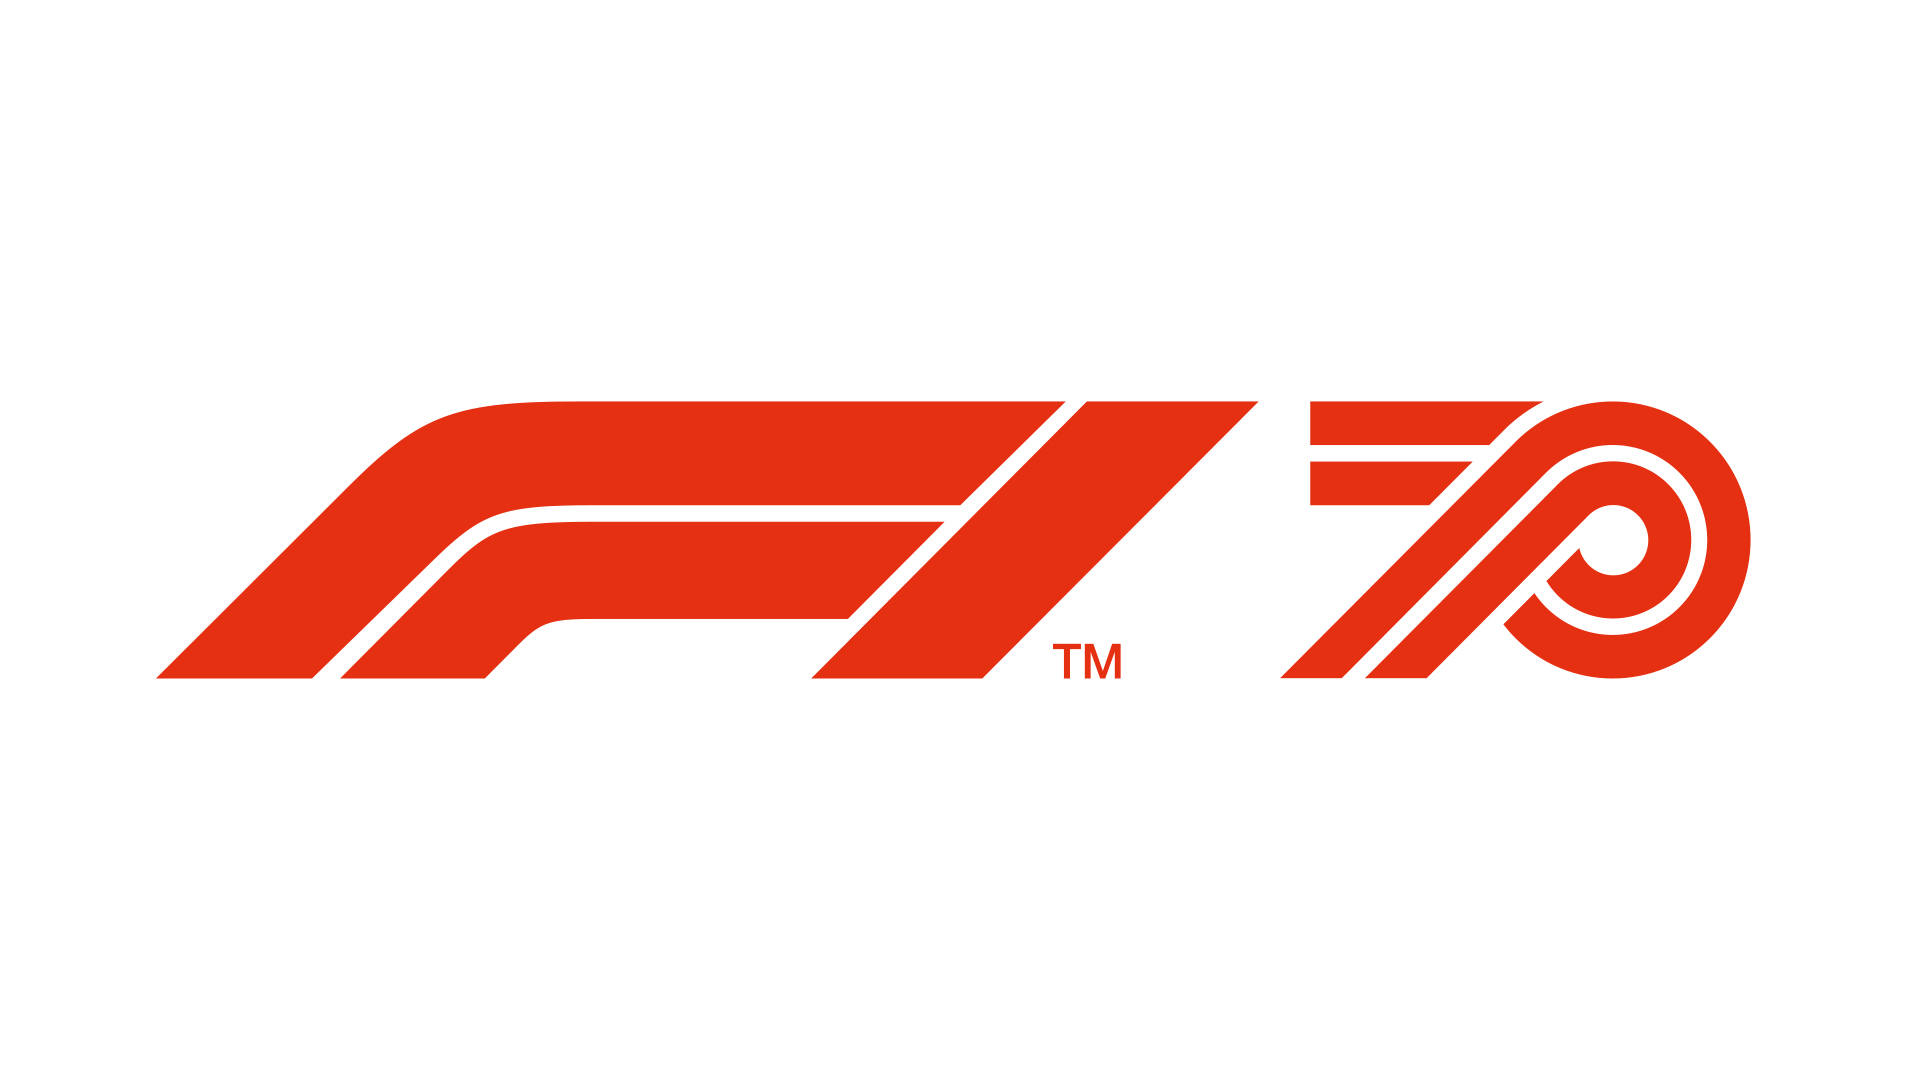 Formule1 2021 GP08 Steiermark Eerste Vrije Training DUTCH 1080p HDTV x264-DTOD